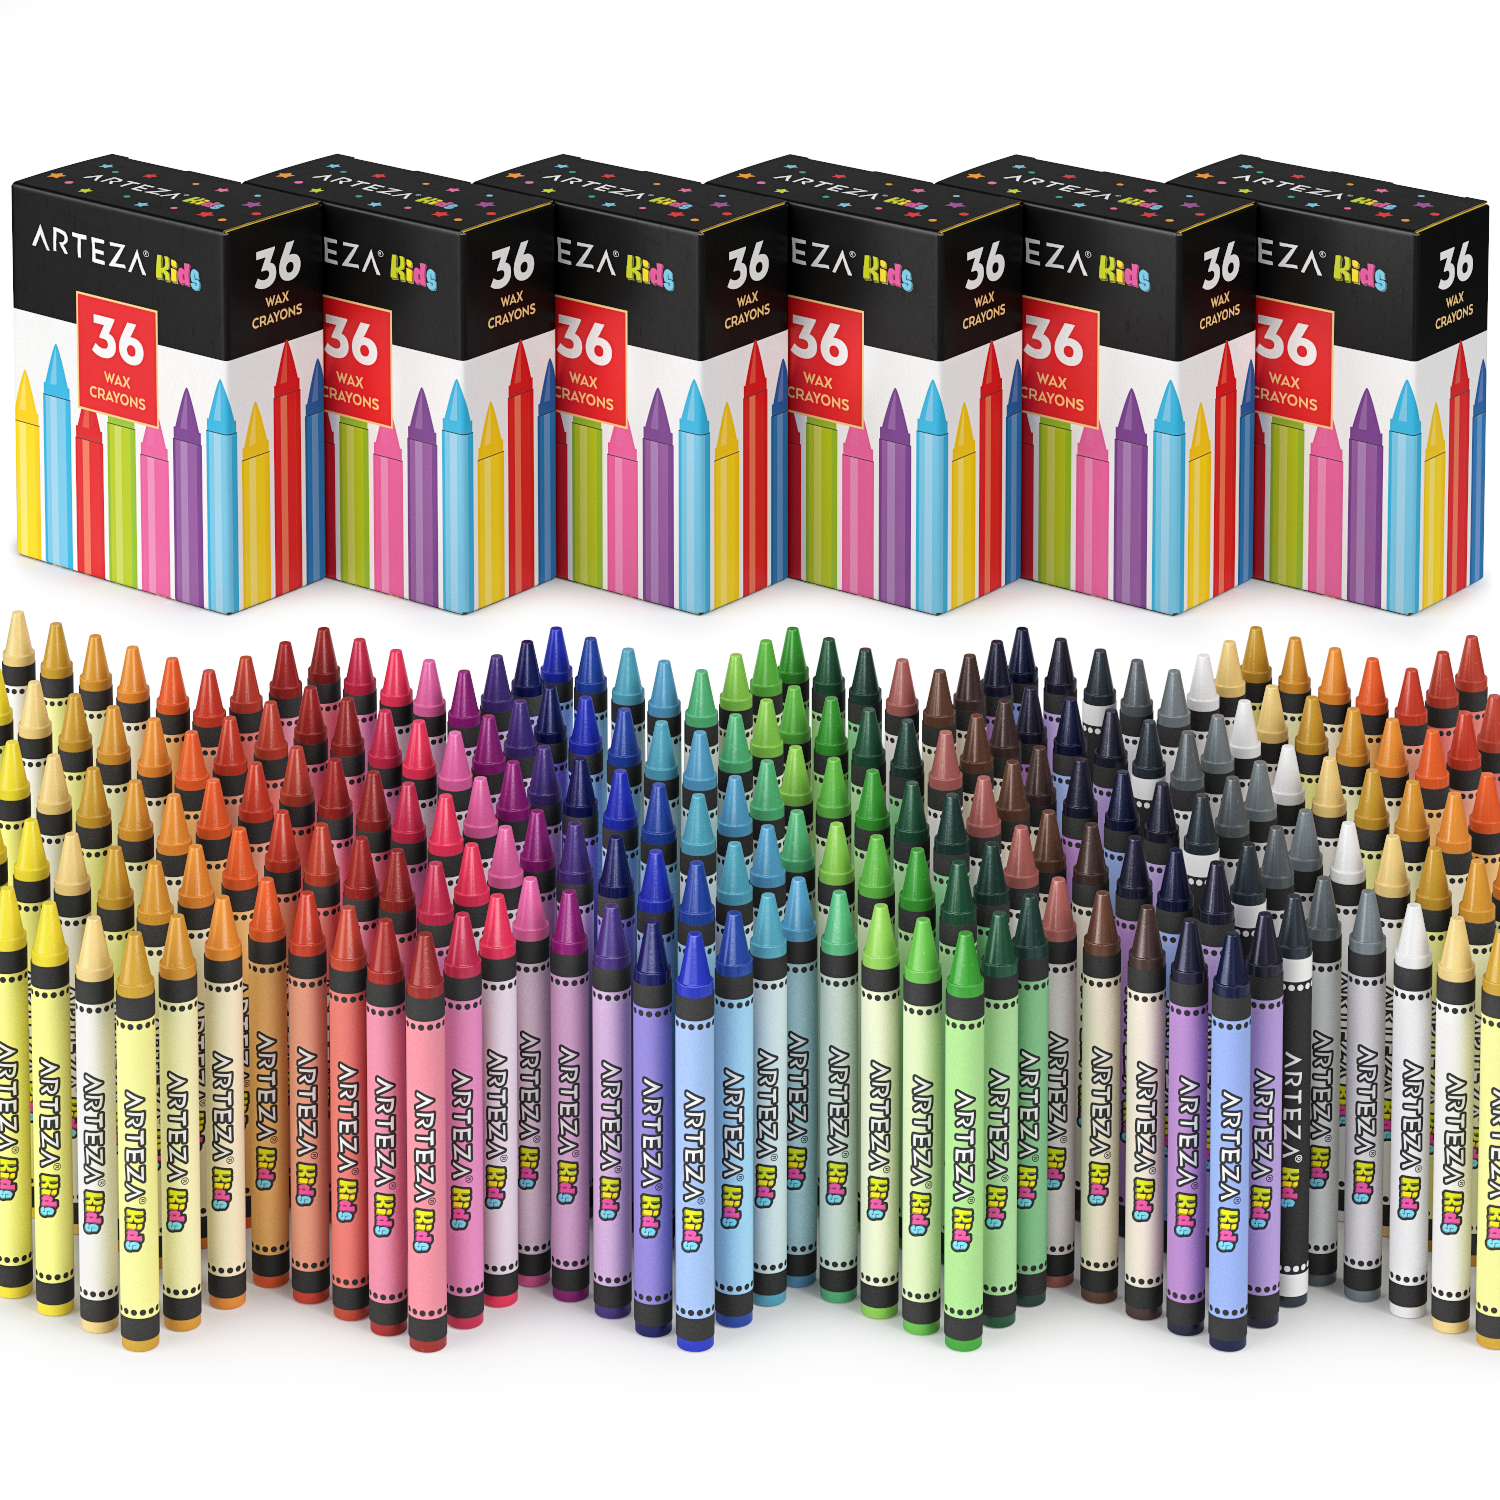 WAX CRAYONS BULK Lot 2.5 Pound Crayola & Mix Rainbow Whole Make